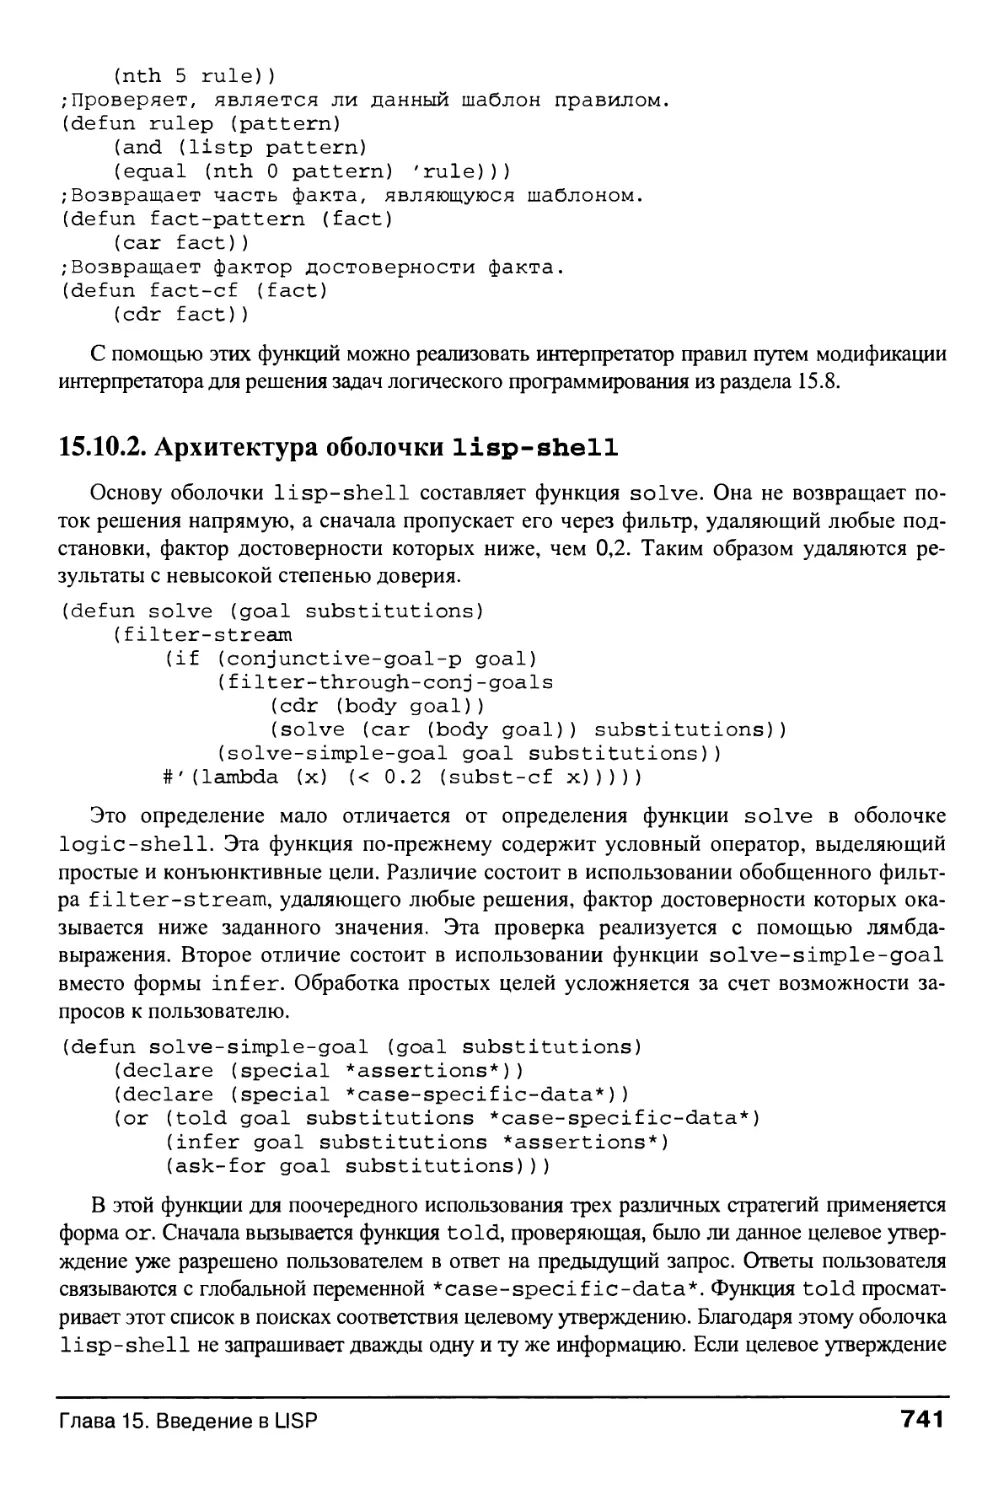 15.10.2. Архитектура оболочки lisp-shell